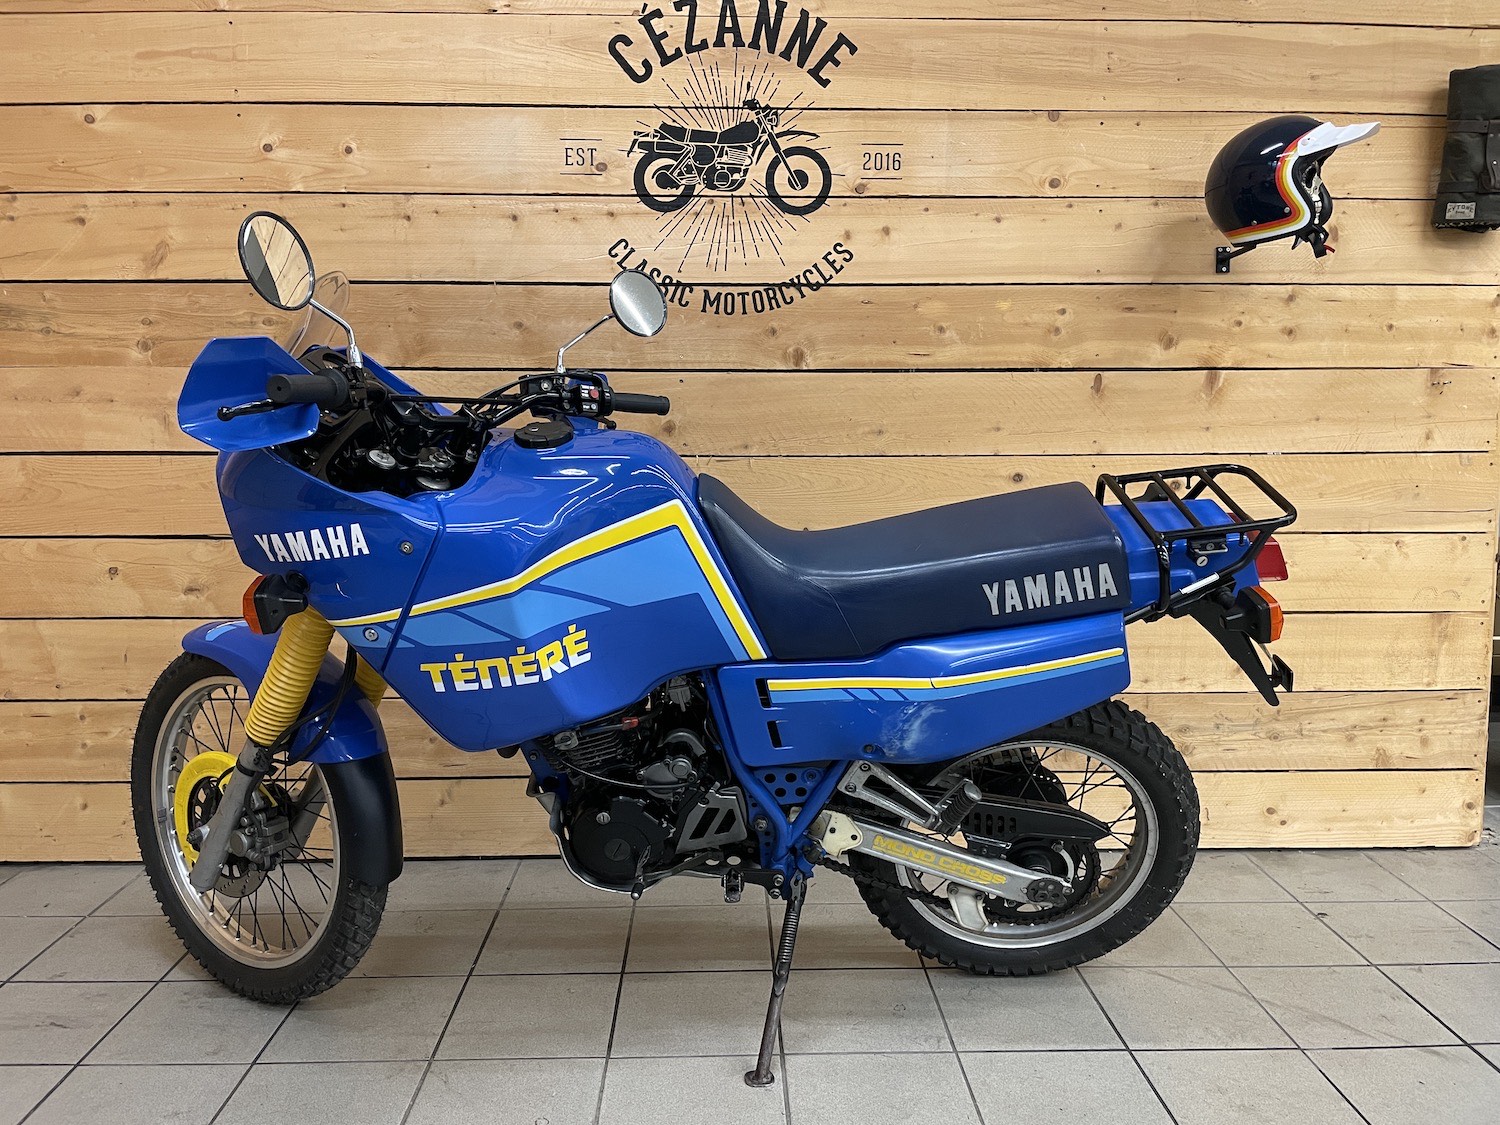 Yamaha_XT600Z_Tenere_cezanne_classic_motorcycle_4-114.jpg